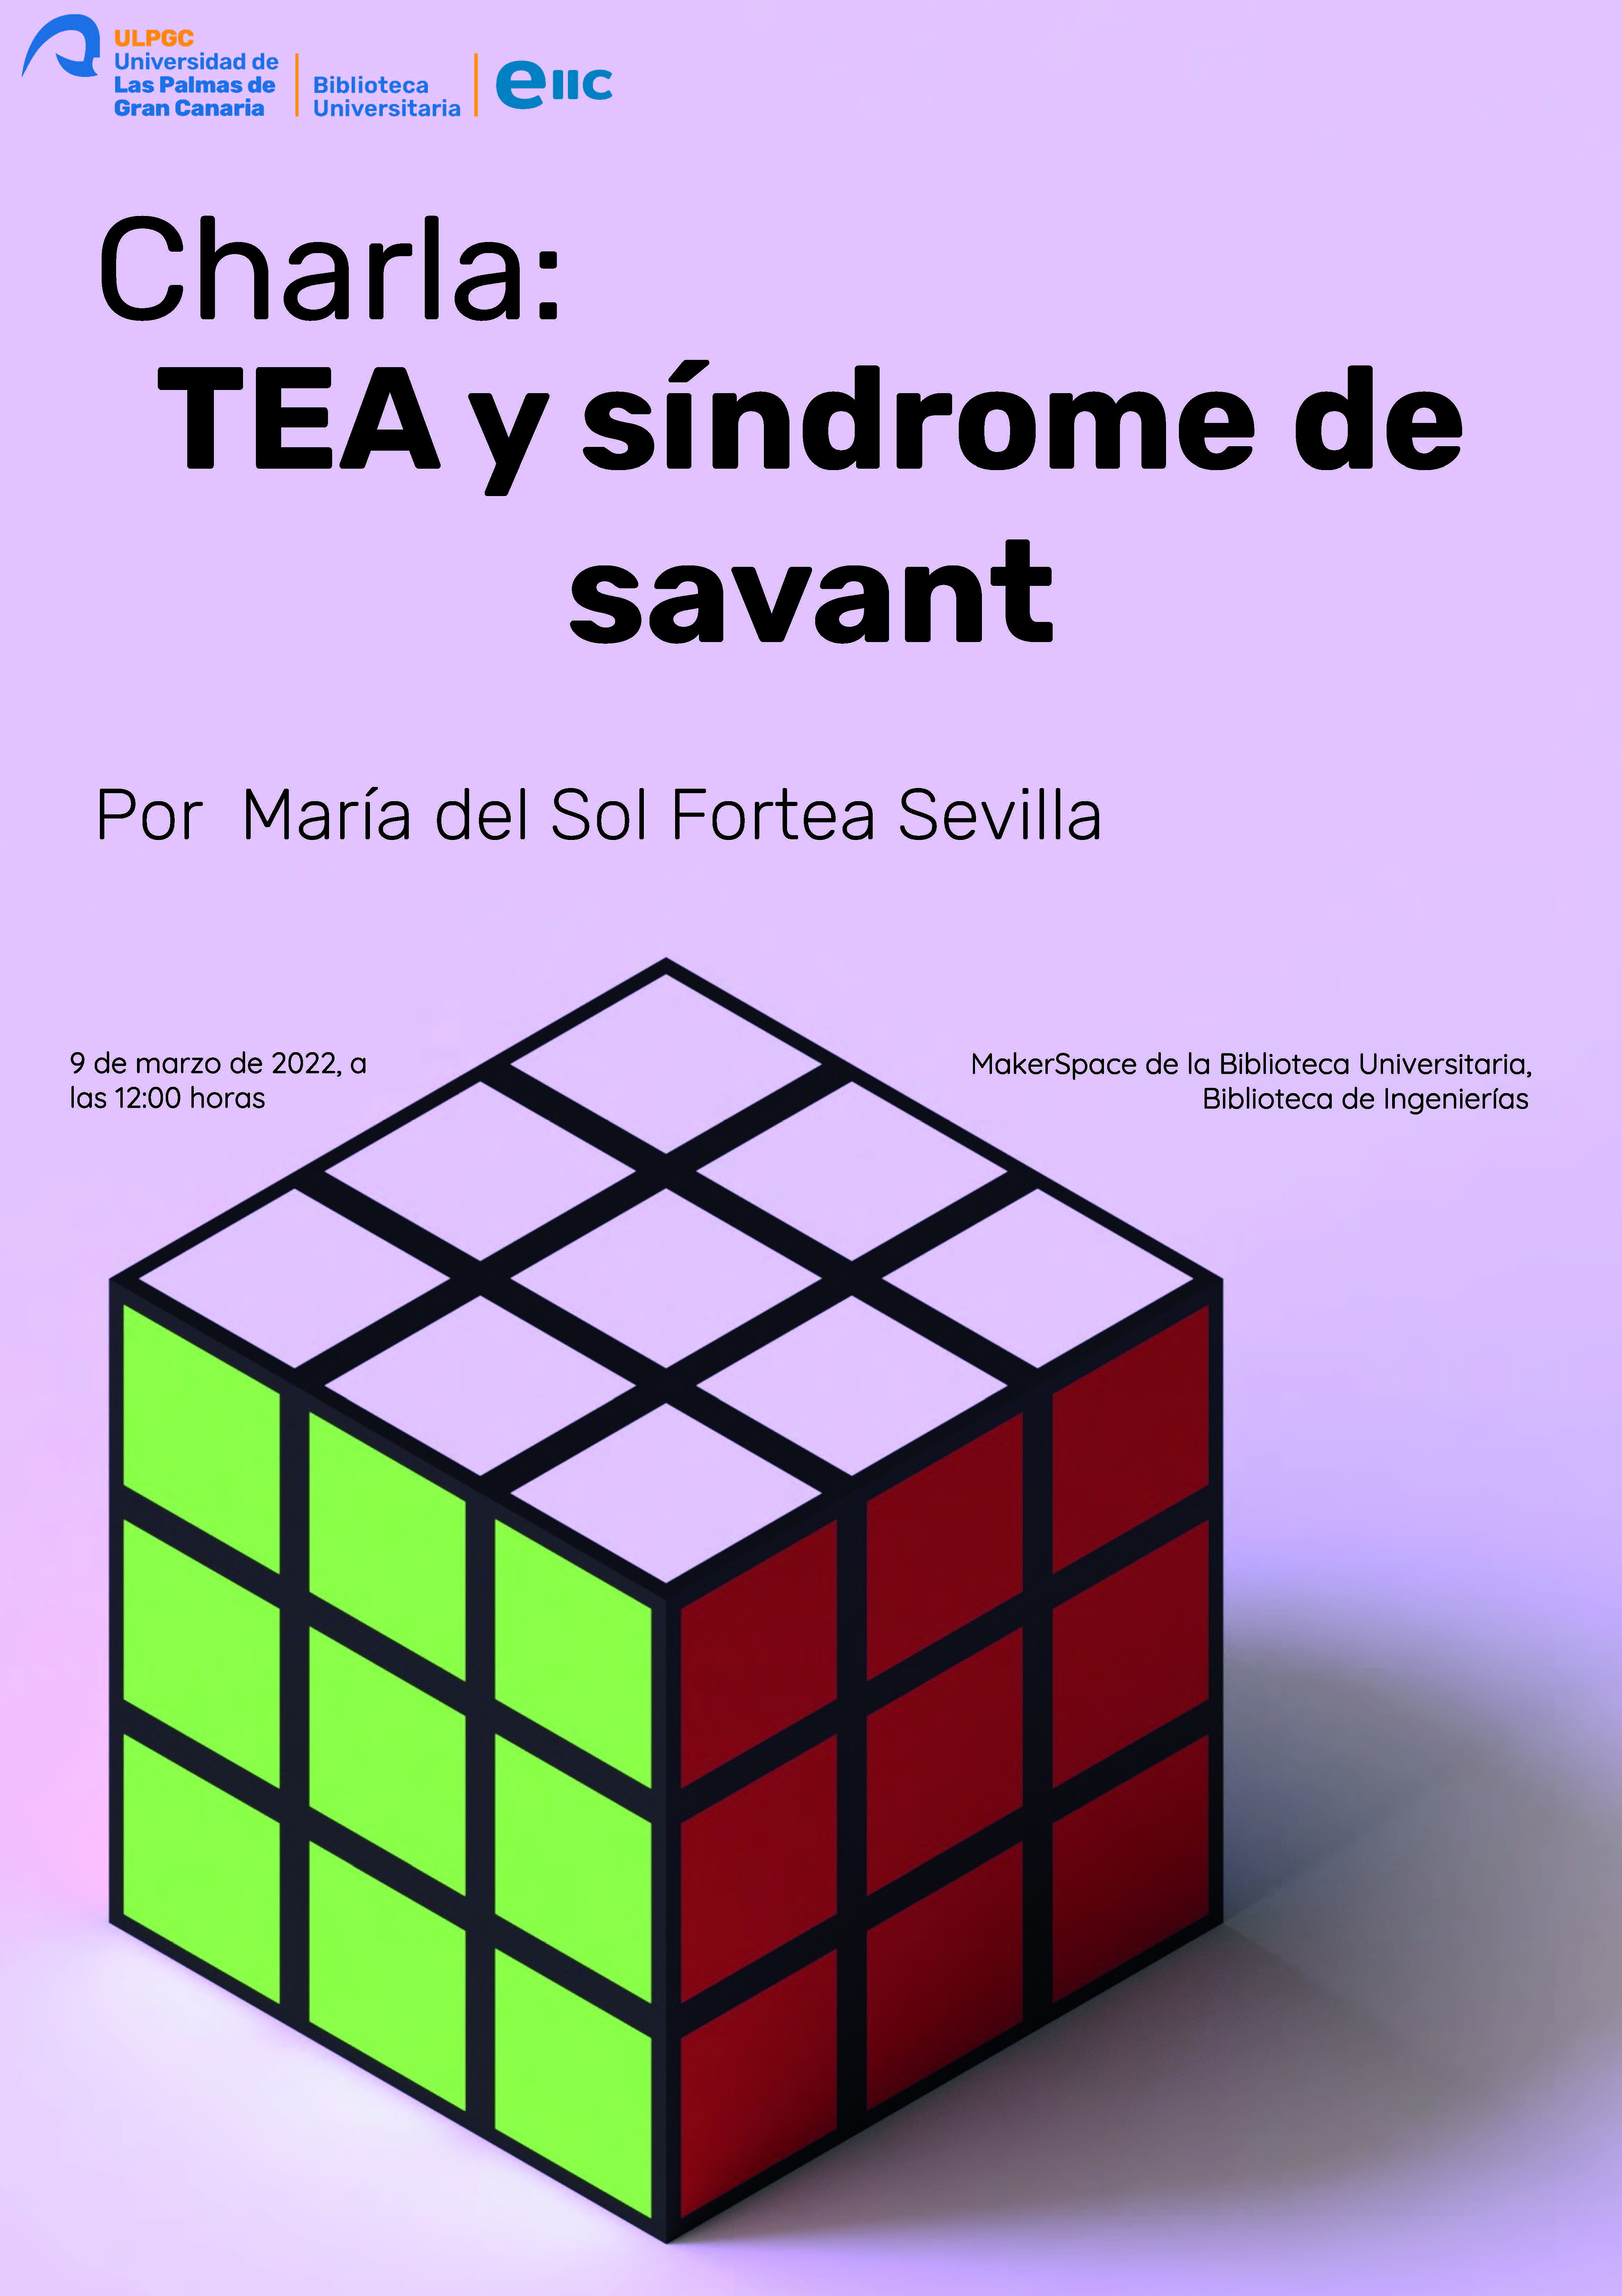 Charla: Tea y síndrome savant